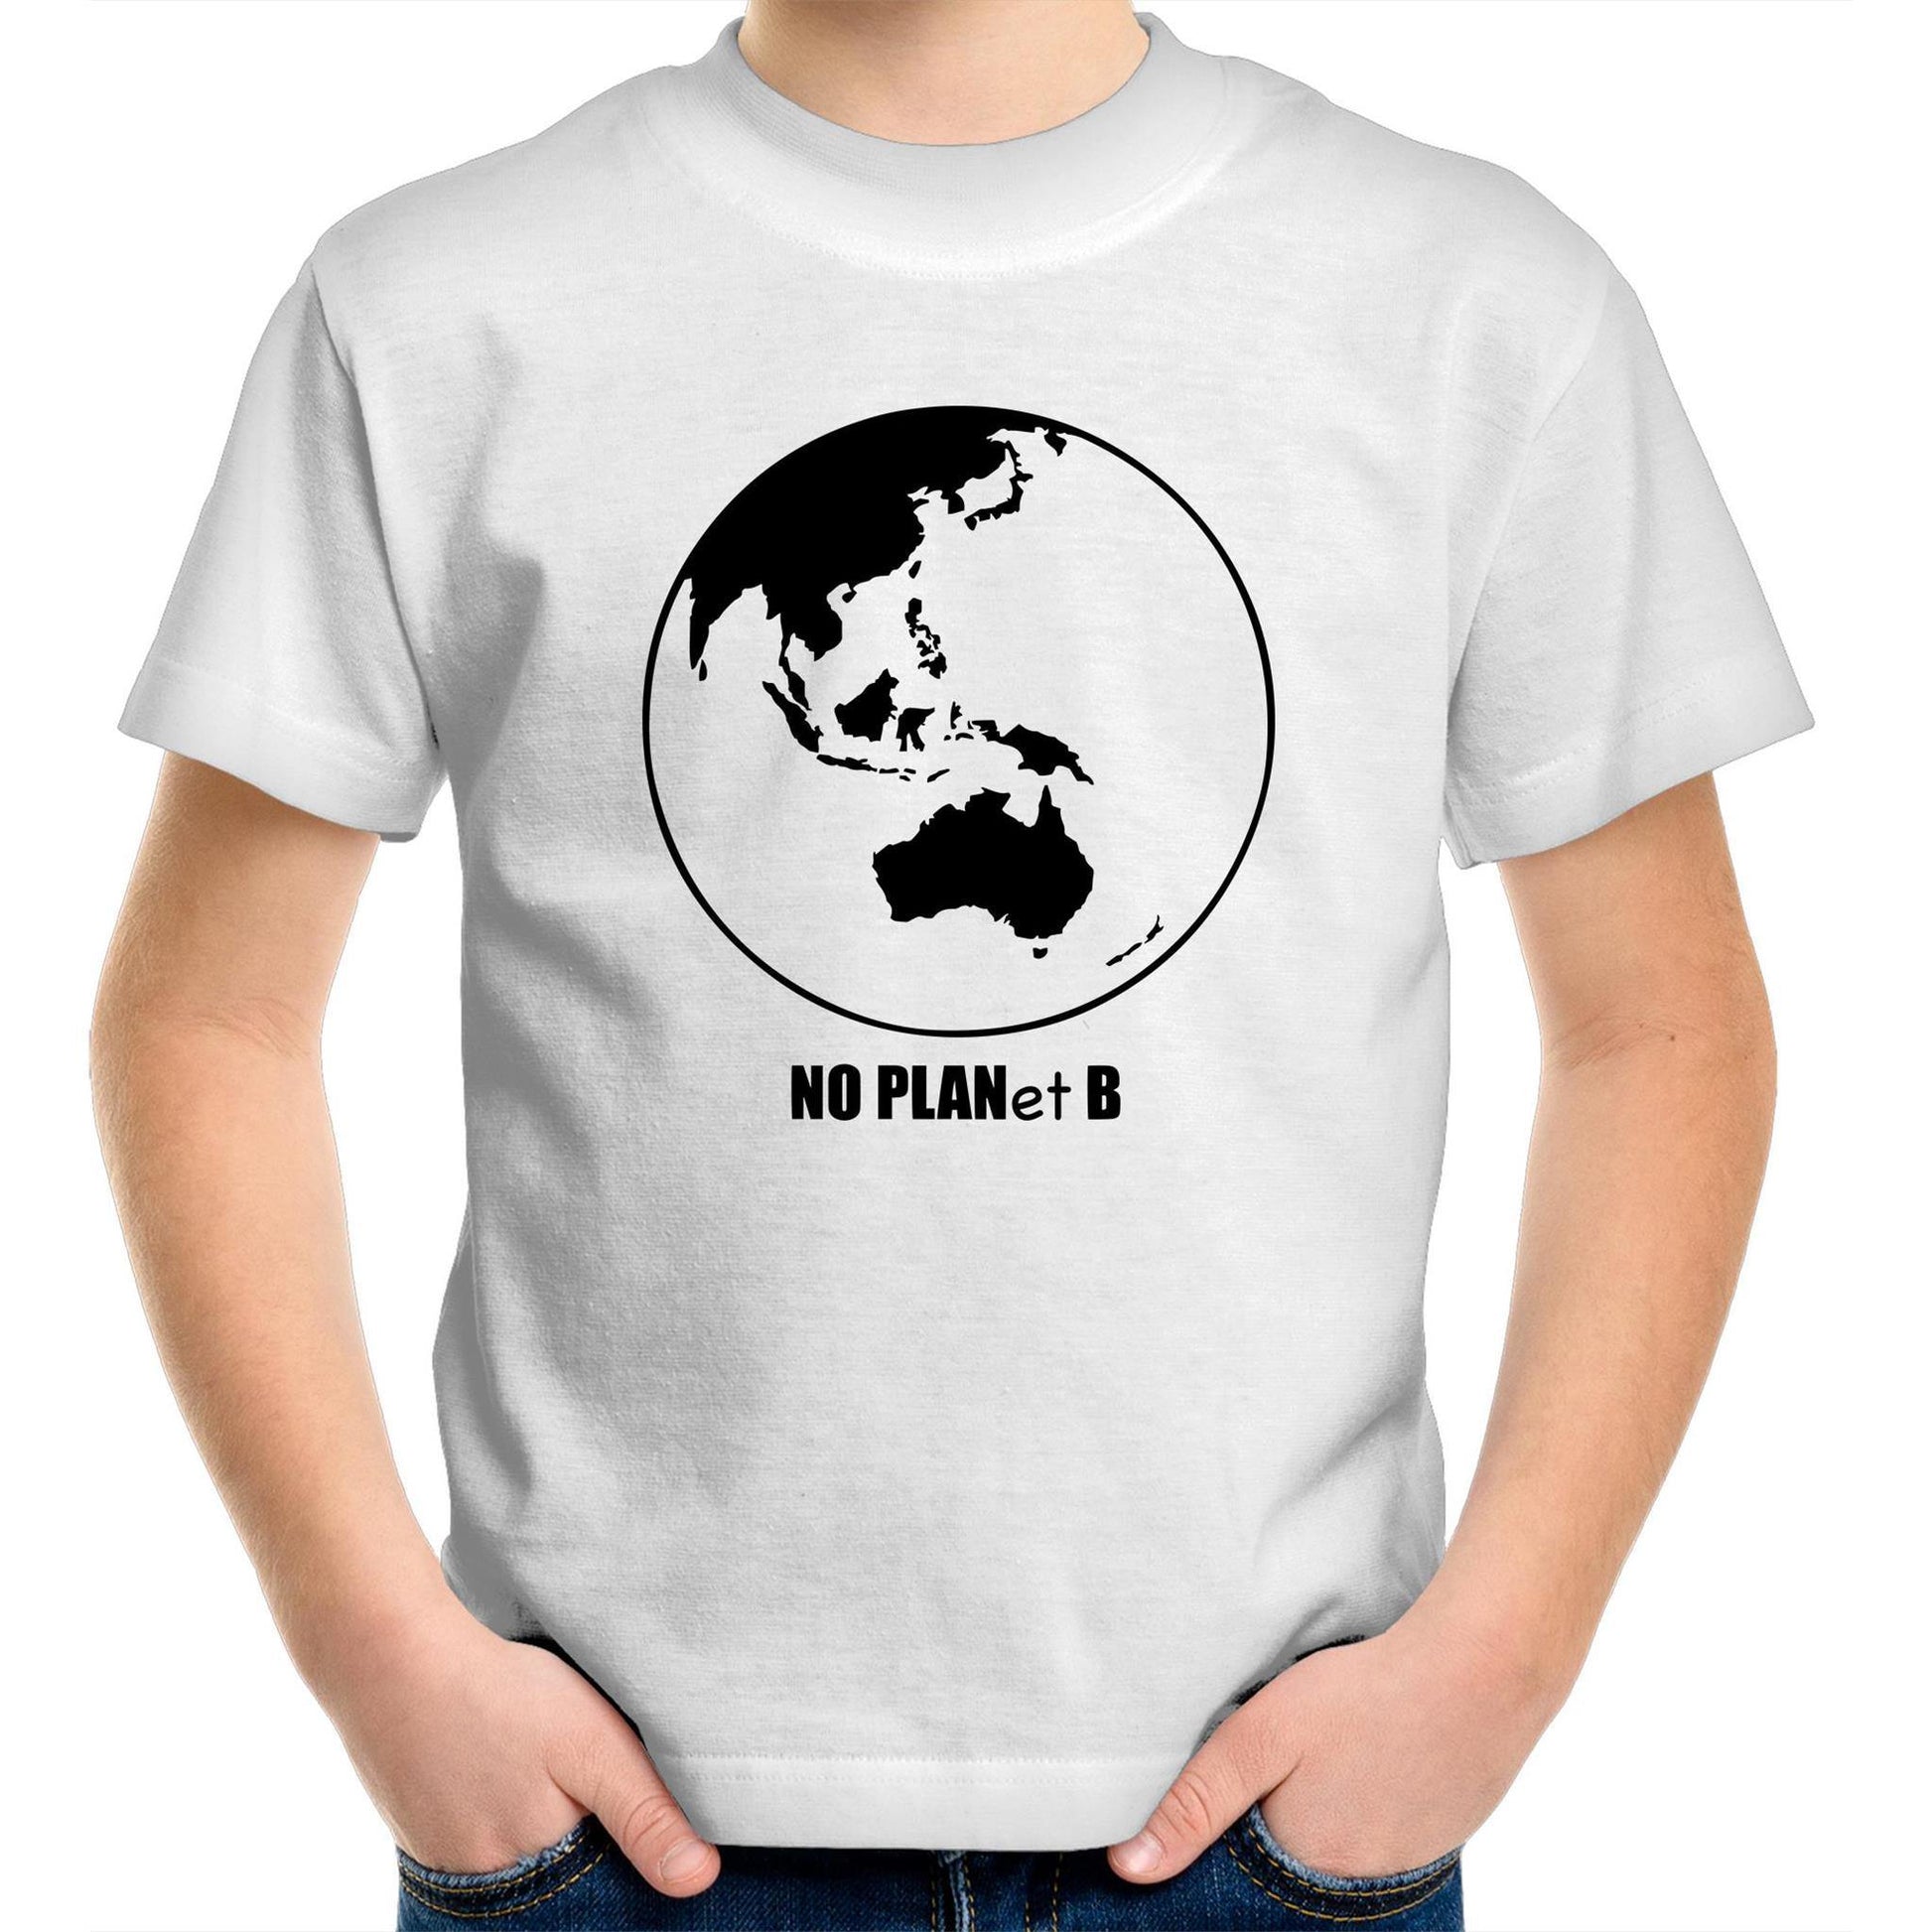 No Planet B - Kids Youth Crew T-Shirt White Kids Youth T-shirt Environment